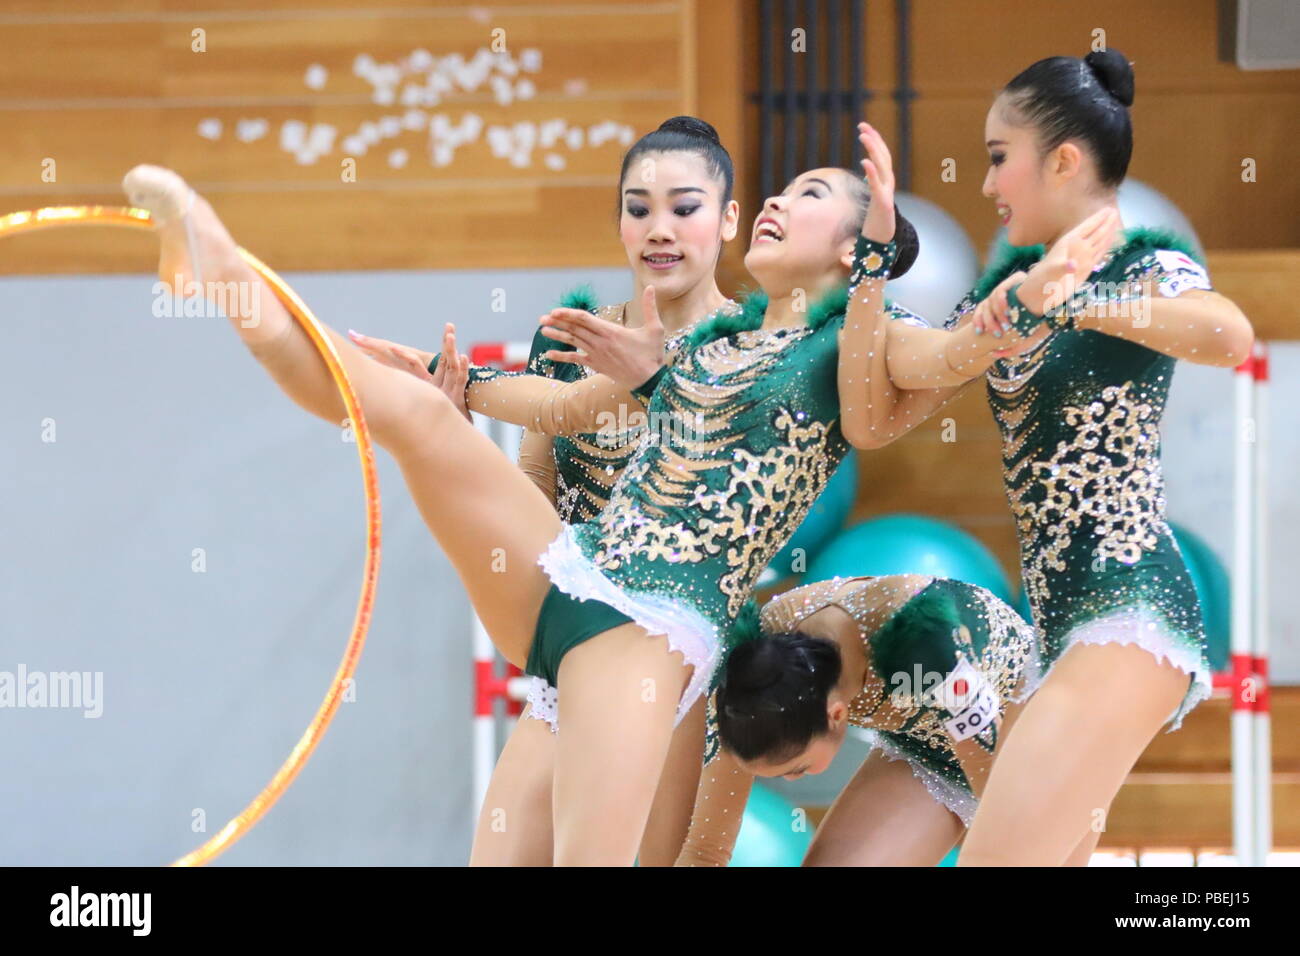 Rhythmic gymnastics japan hi-res stock photography and images - Alamy